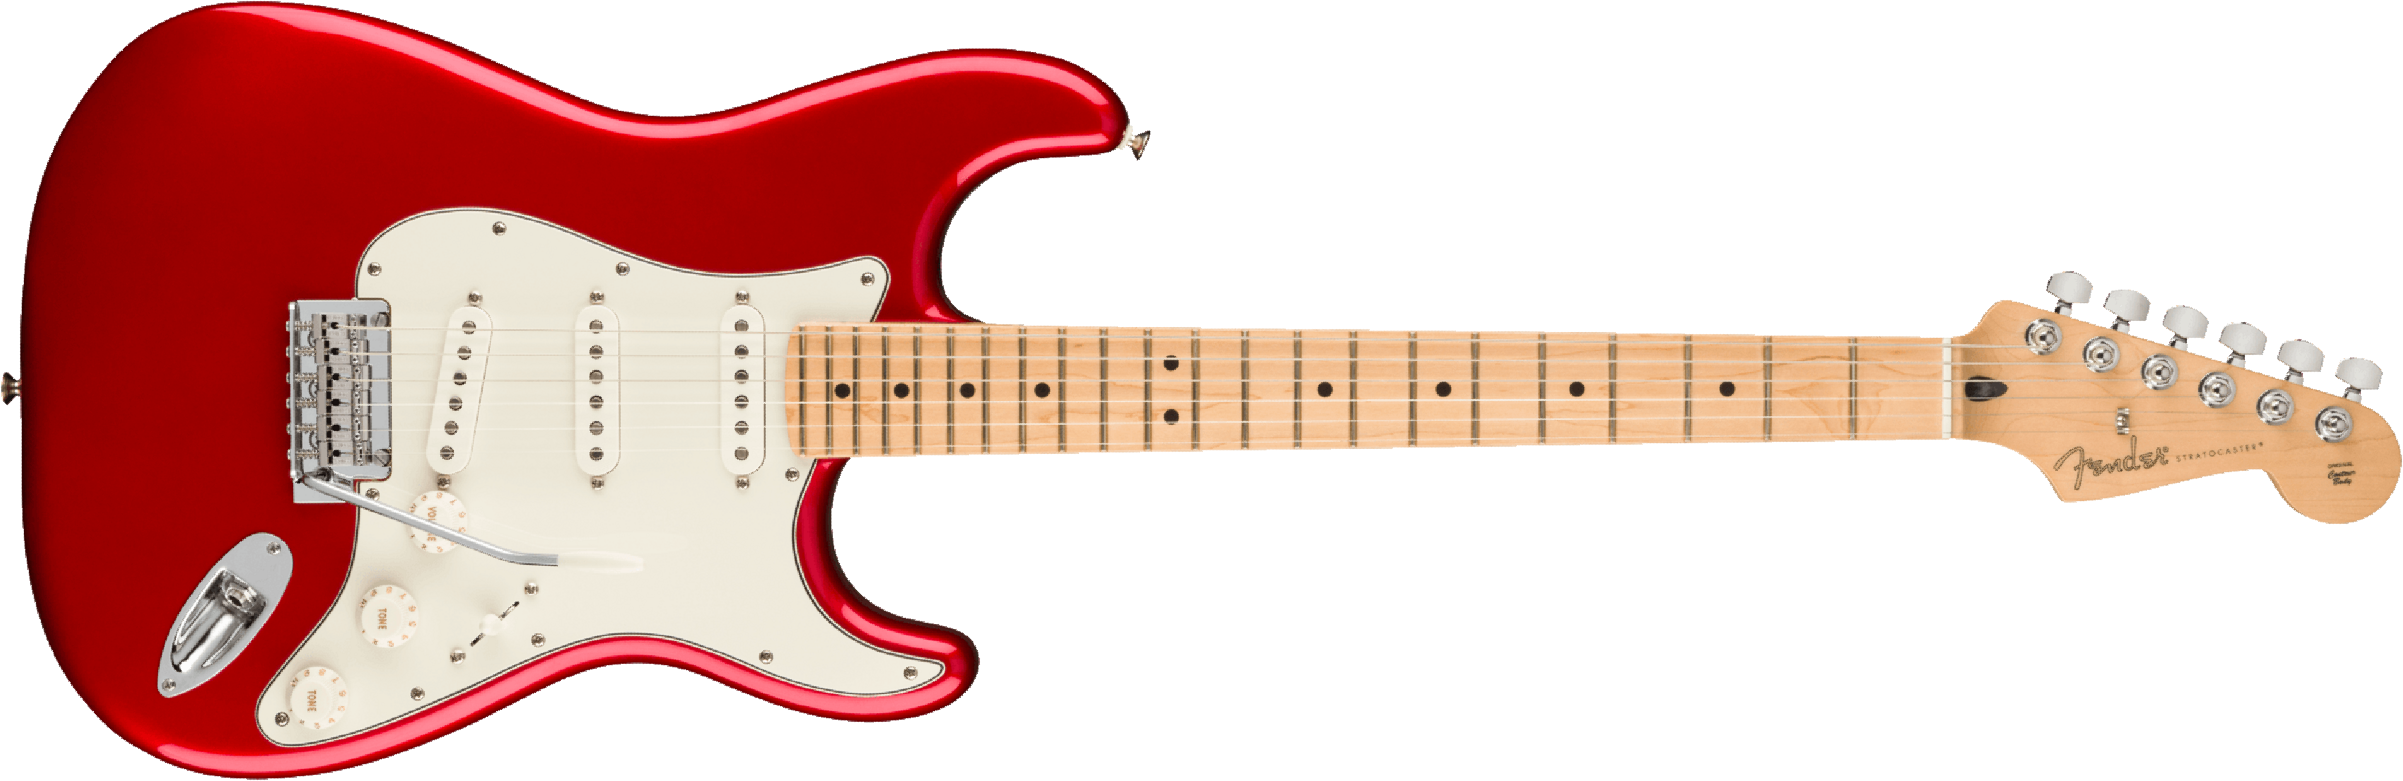 Fender Strat Player Mex 2023 3s Trem Mn - Candy Apple Red - Guitare Électrique Forme Str - Main picture